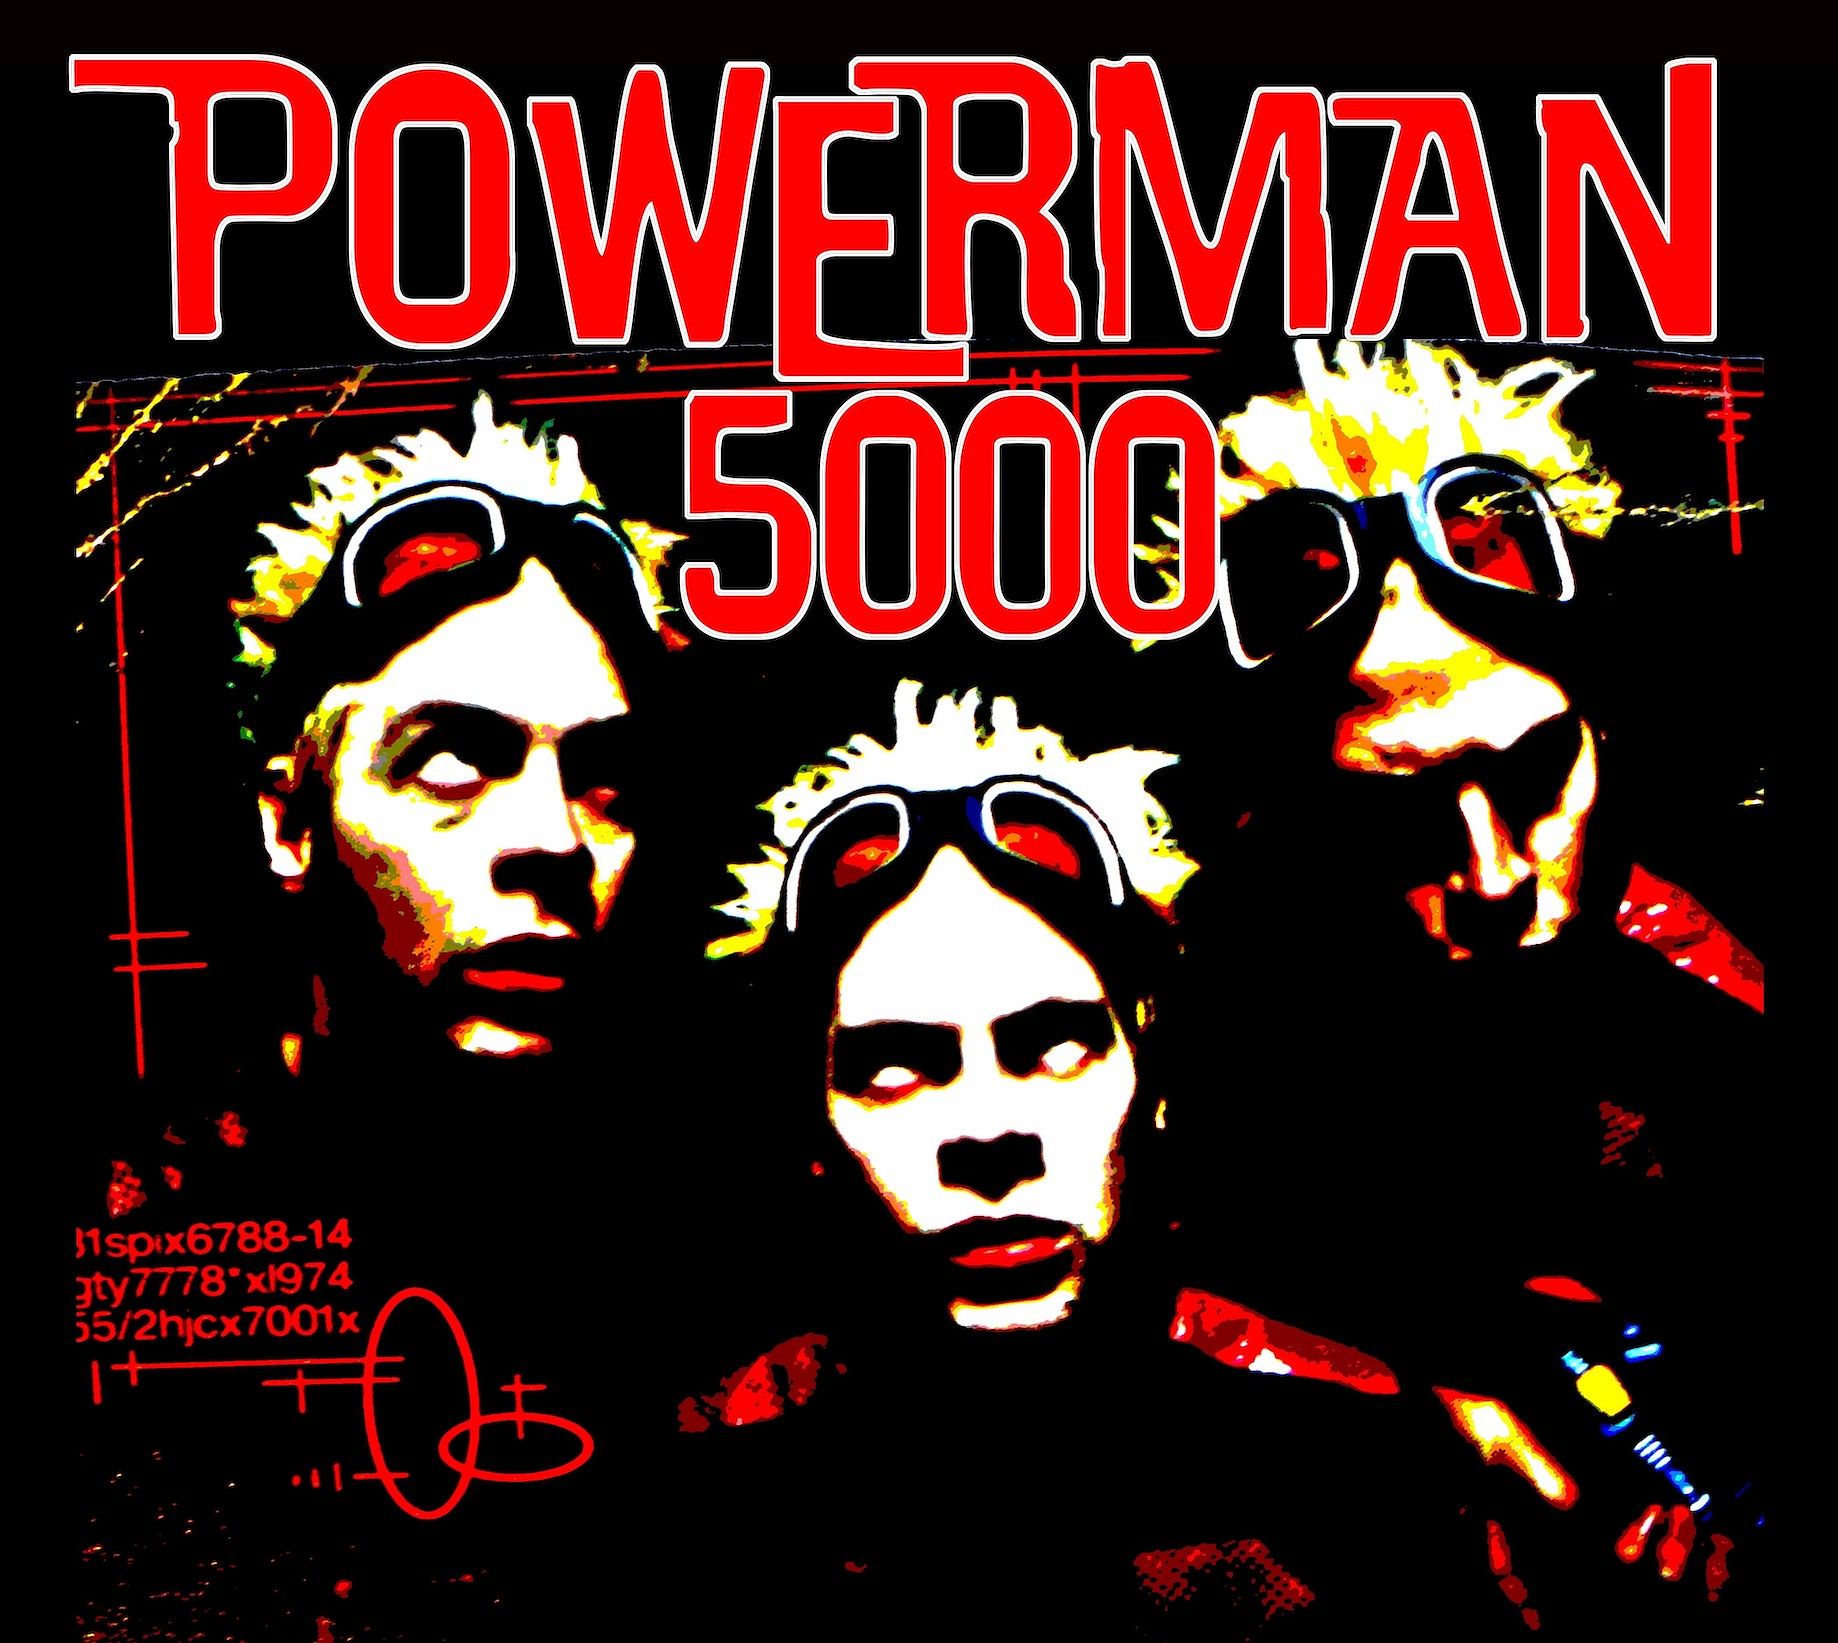 POWERMAN 5000 / THE WORLD OVER / PORTLAND Tickets at Bossanova Ballroom in  Portland by Bossanova Presents | Tixr